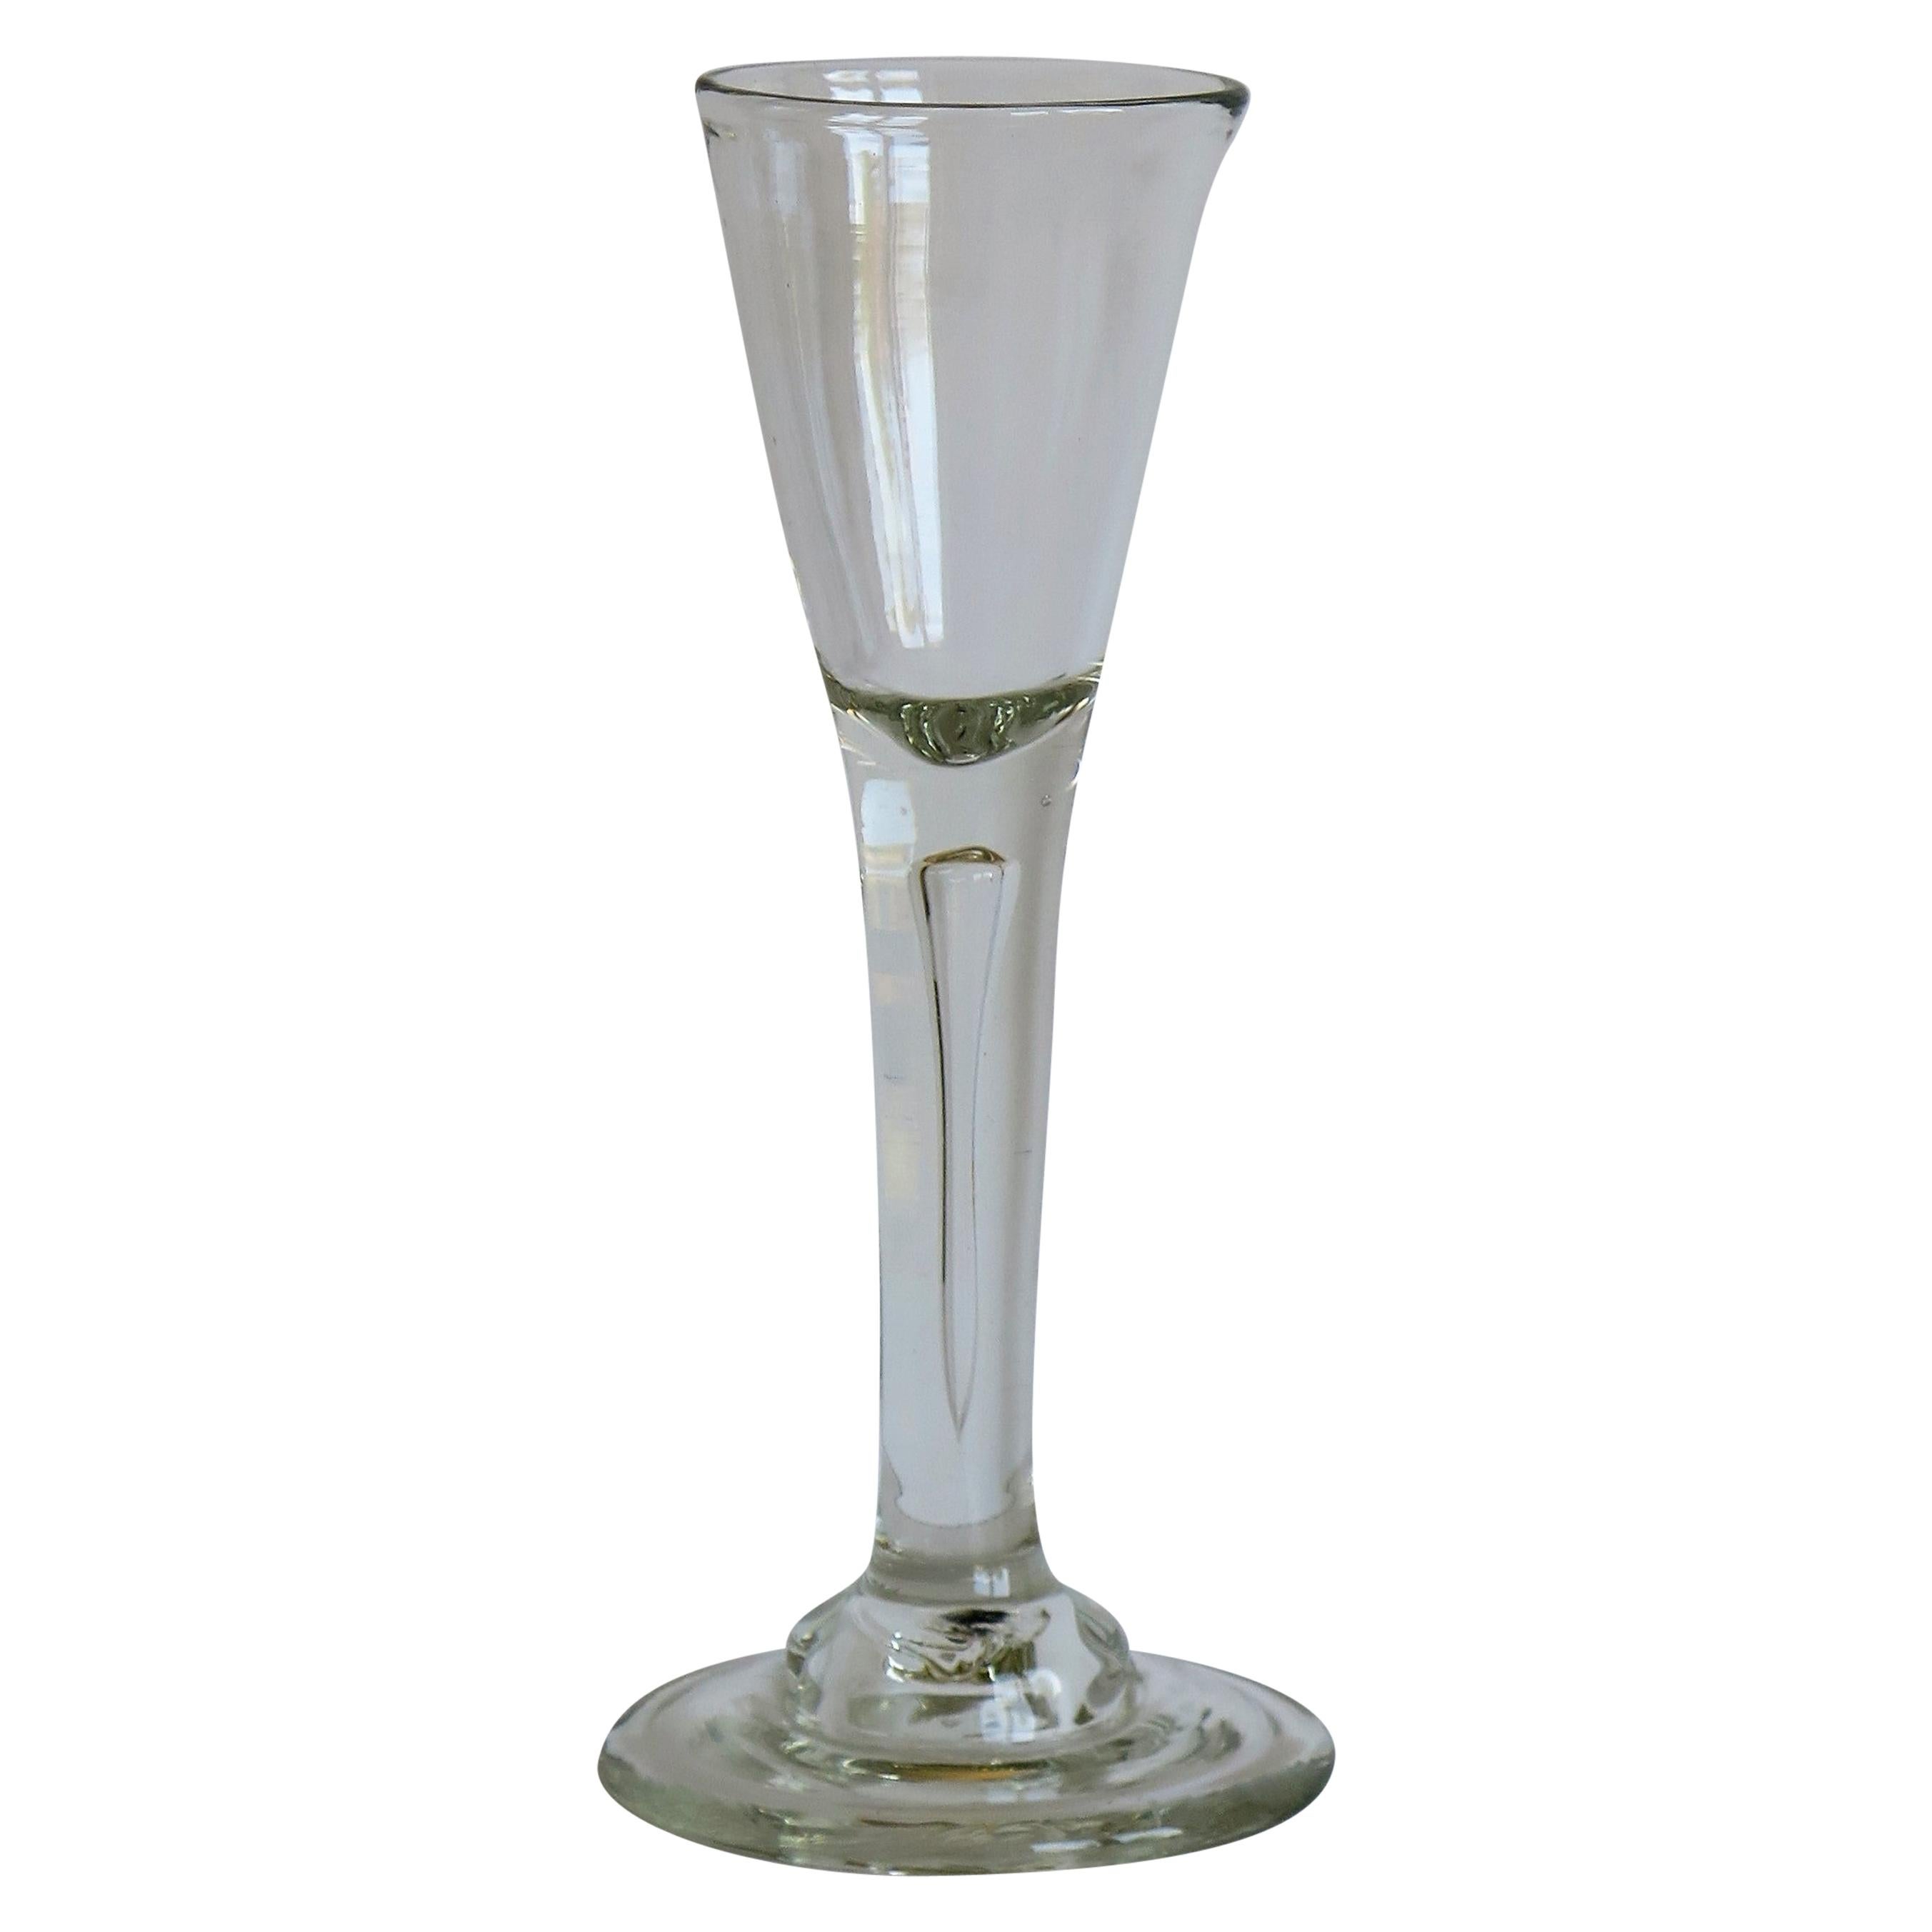 18th century wine glasses